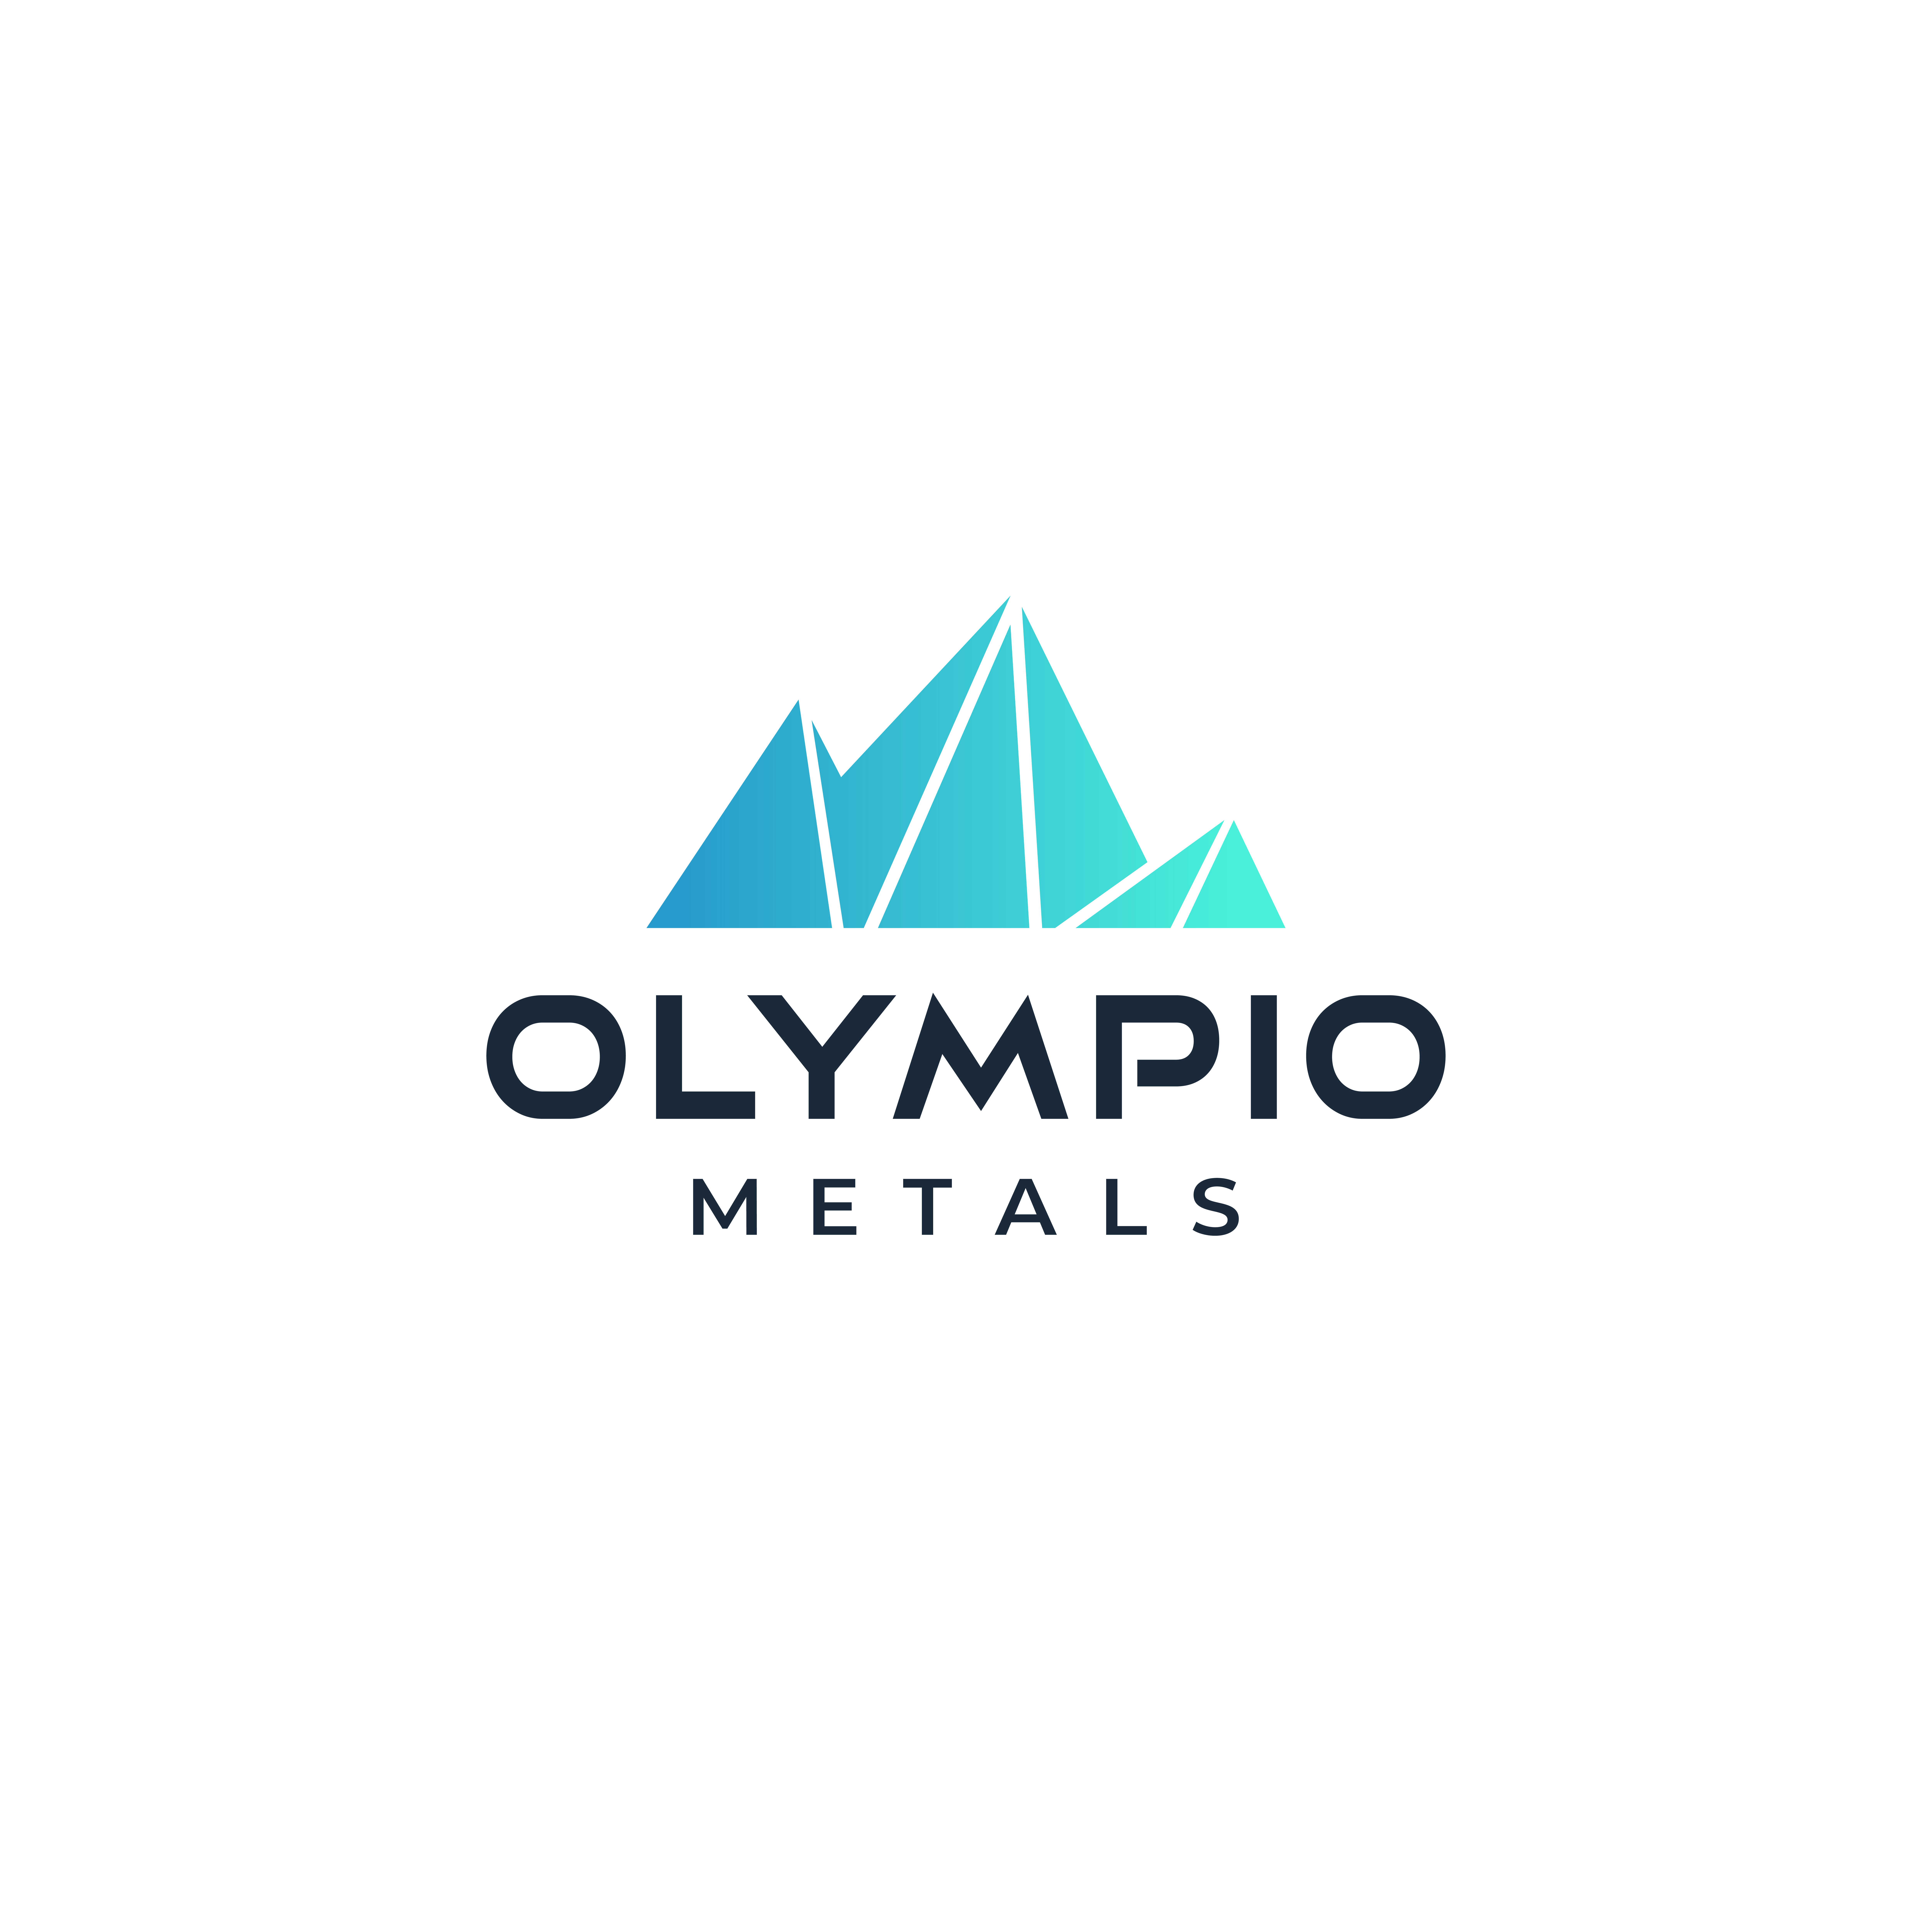 Olympio Metals – OLY